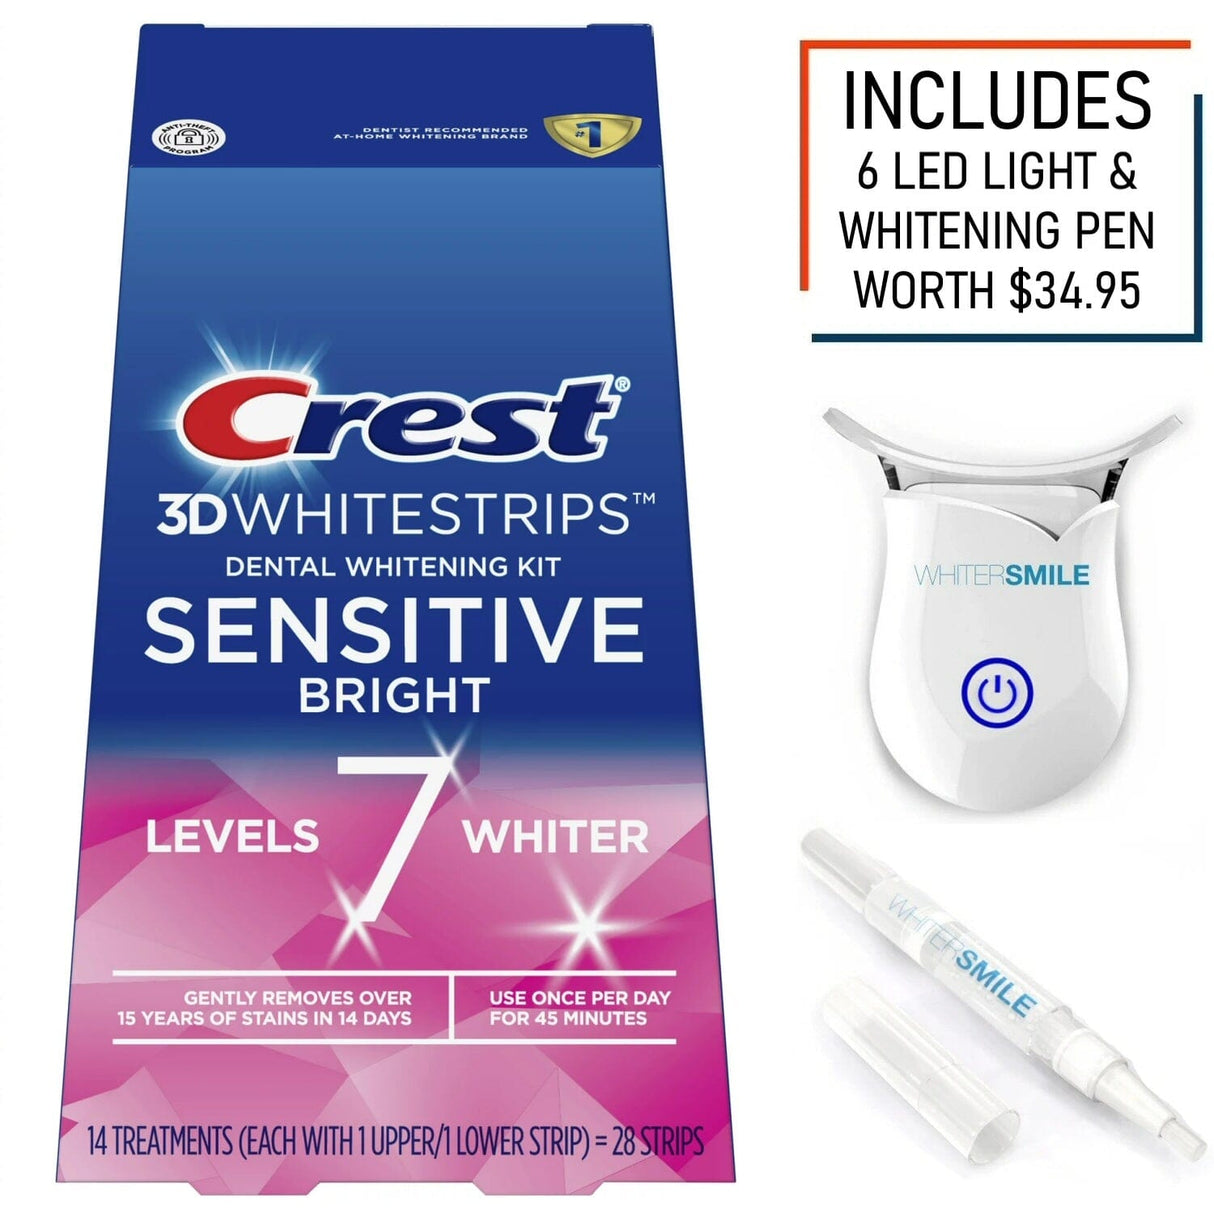 Crest 3D Whitestrips Sensitive Bright + Bonus LED Light & Top Up Pen - Preorder ETA Late Dec Crest 